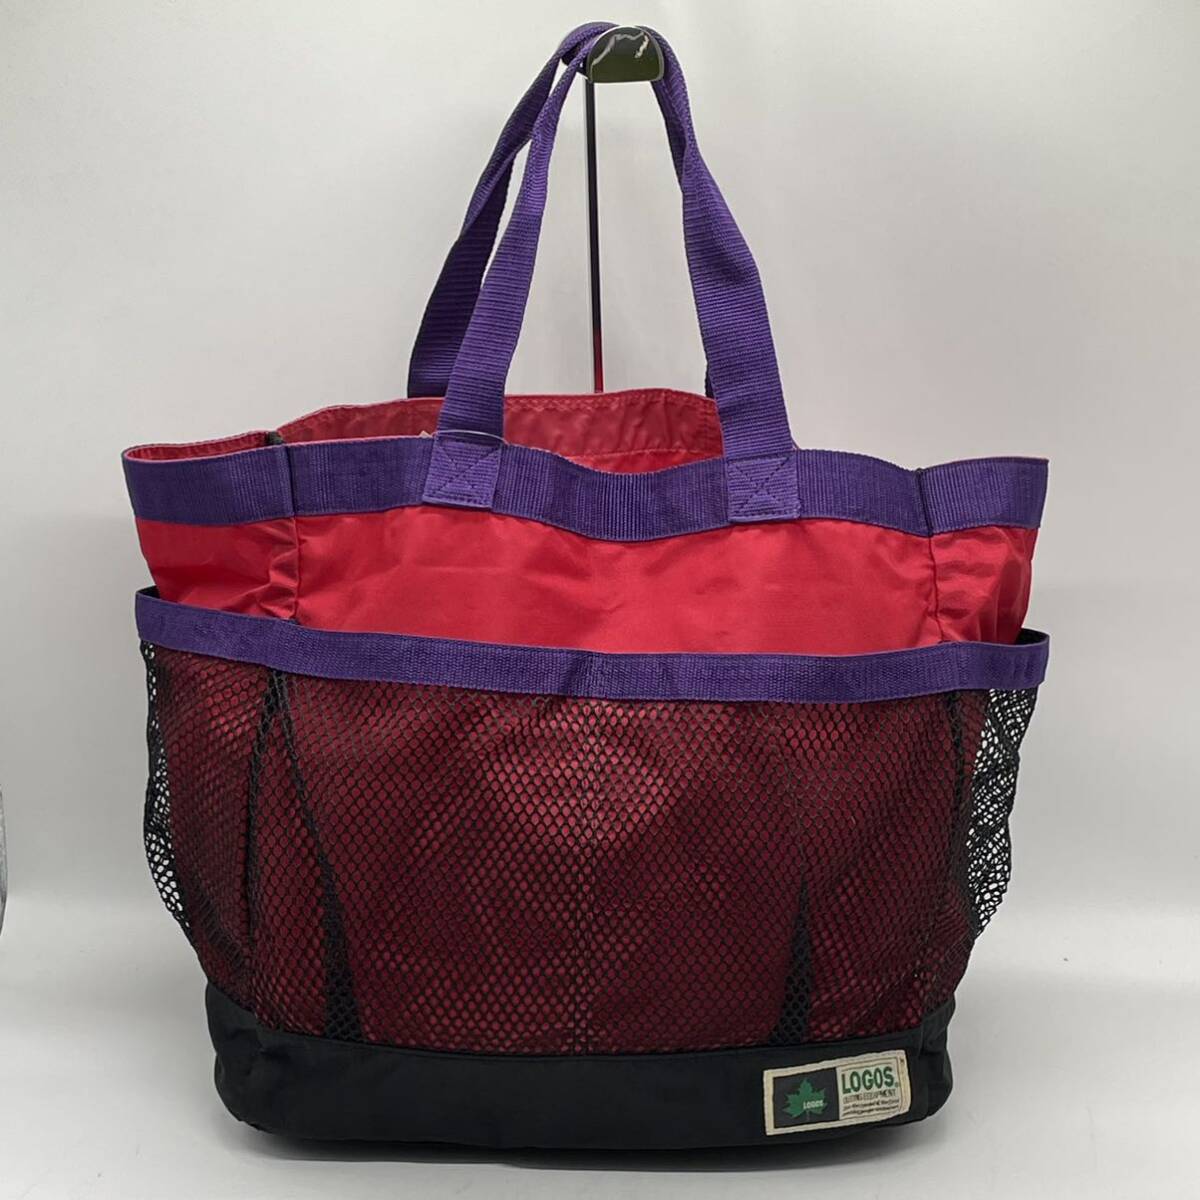 ⑧BN3886● LOGOS ロゴス アウトドア トートバッグ ショルダーバッグ バッグ 鞄 ネット付き 大容量 レッド系の画像1